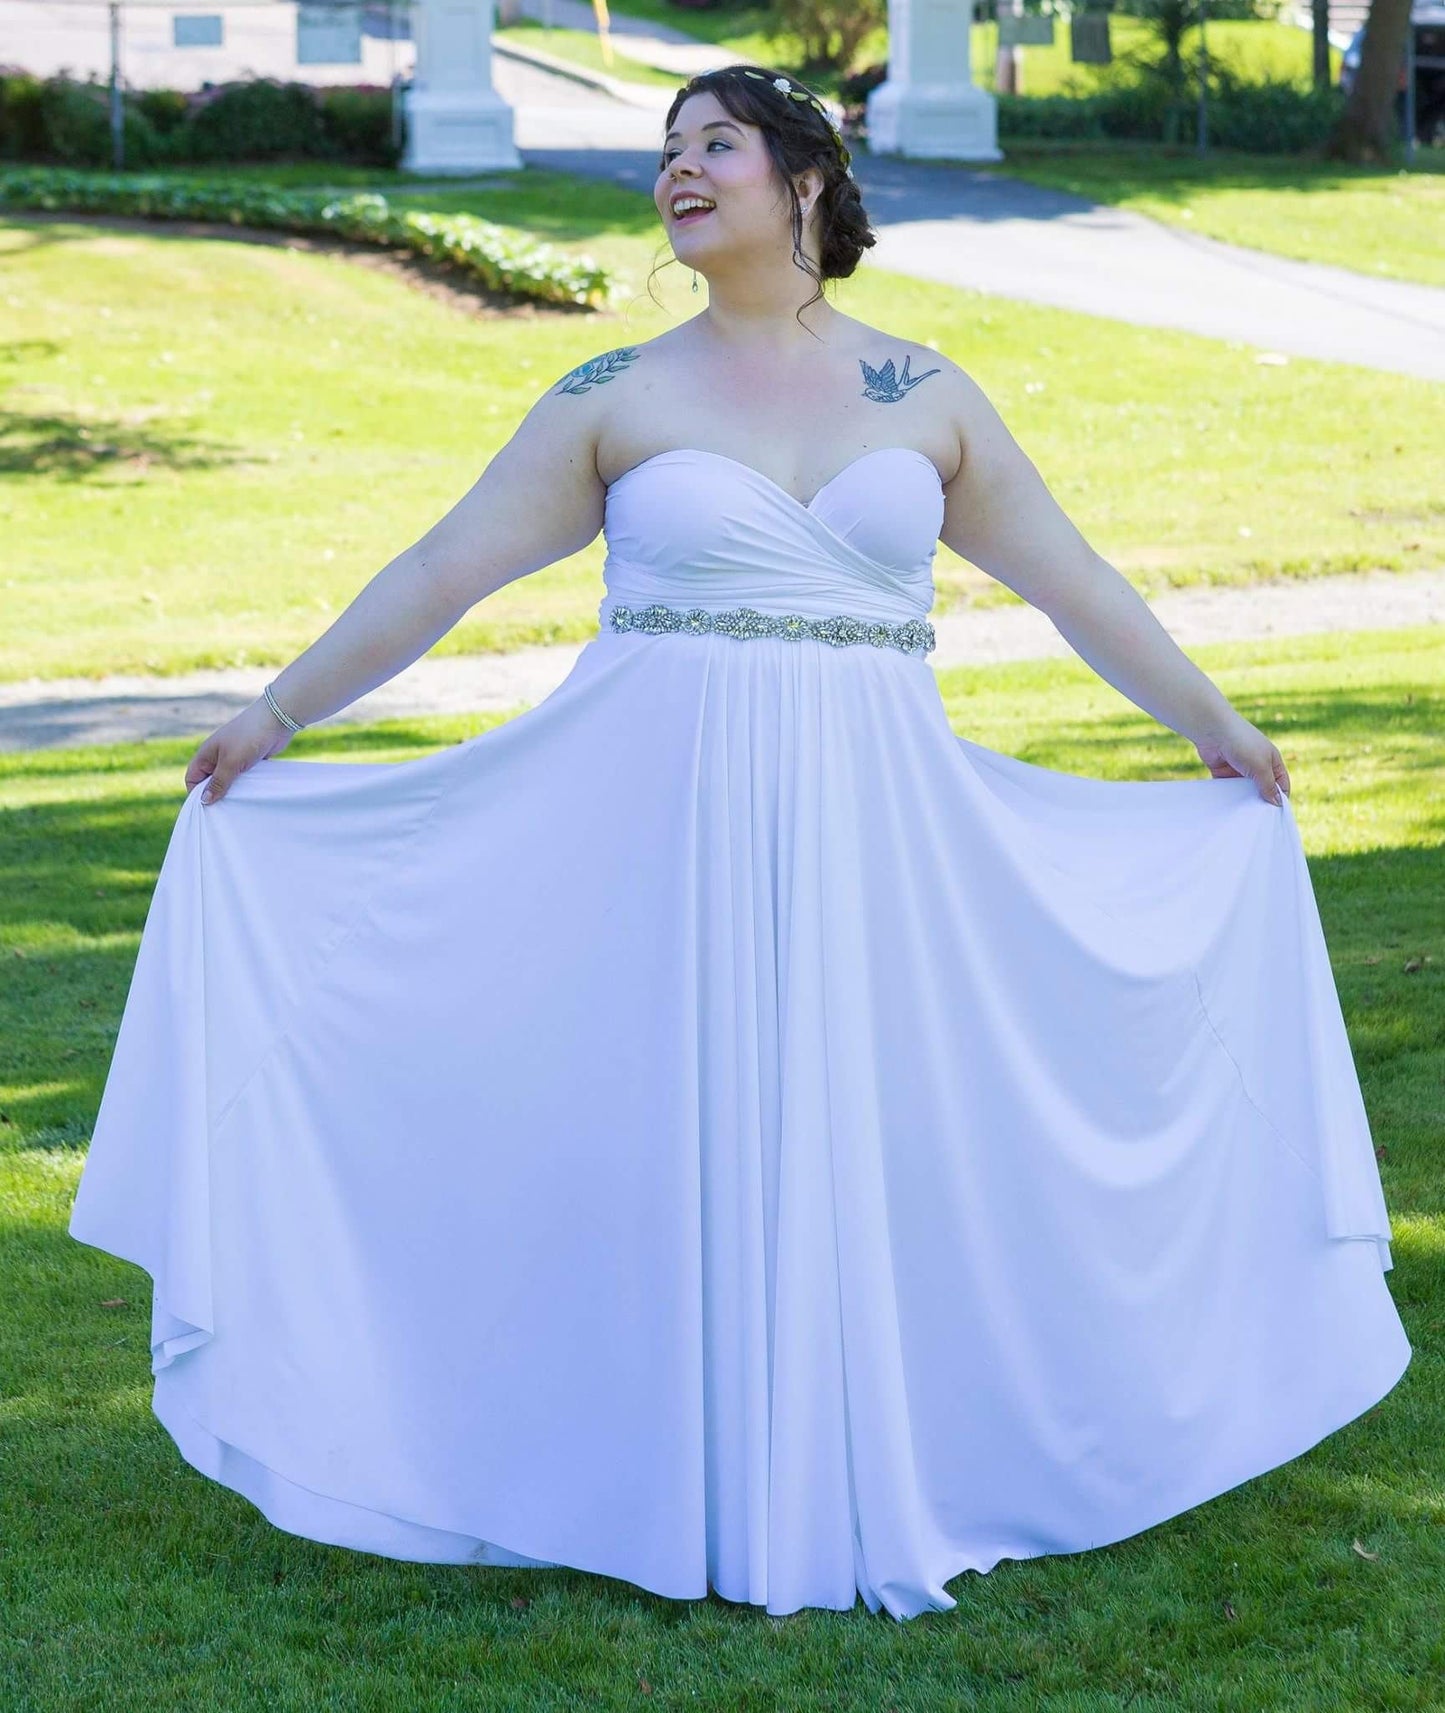 Bridal Convertible Dress